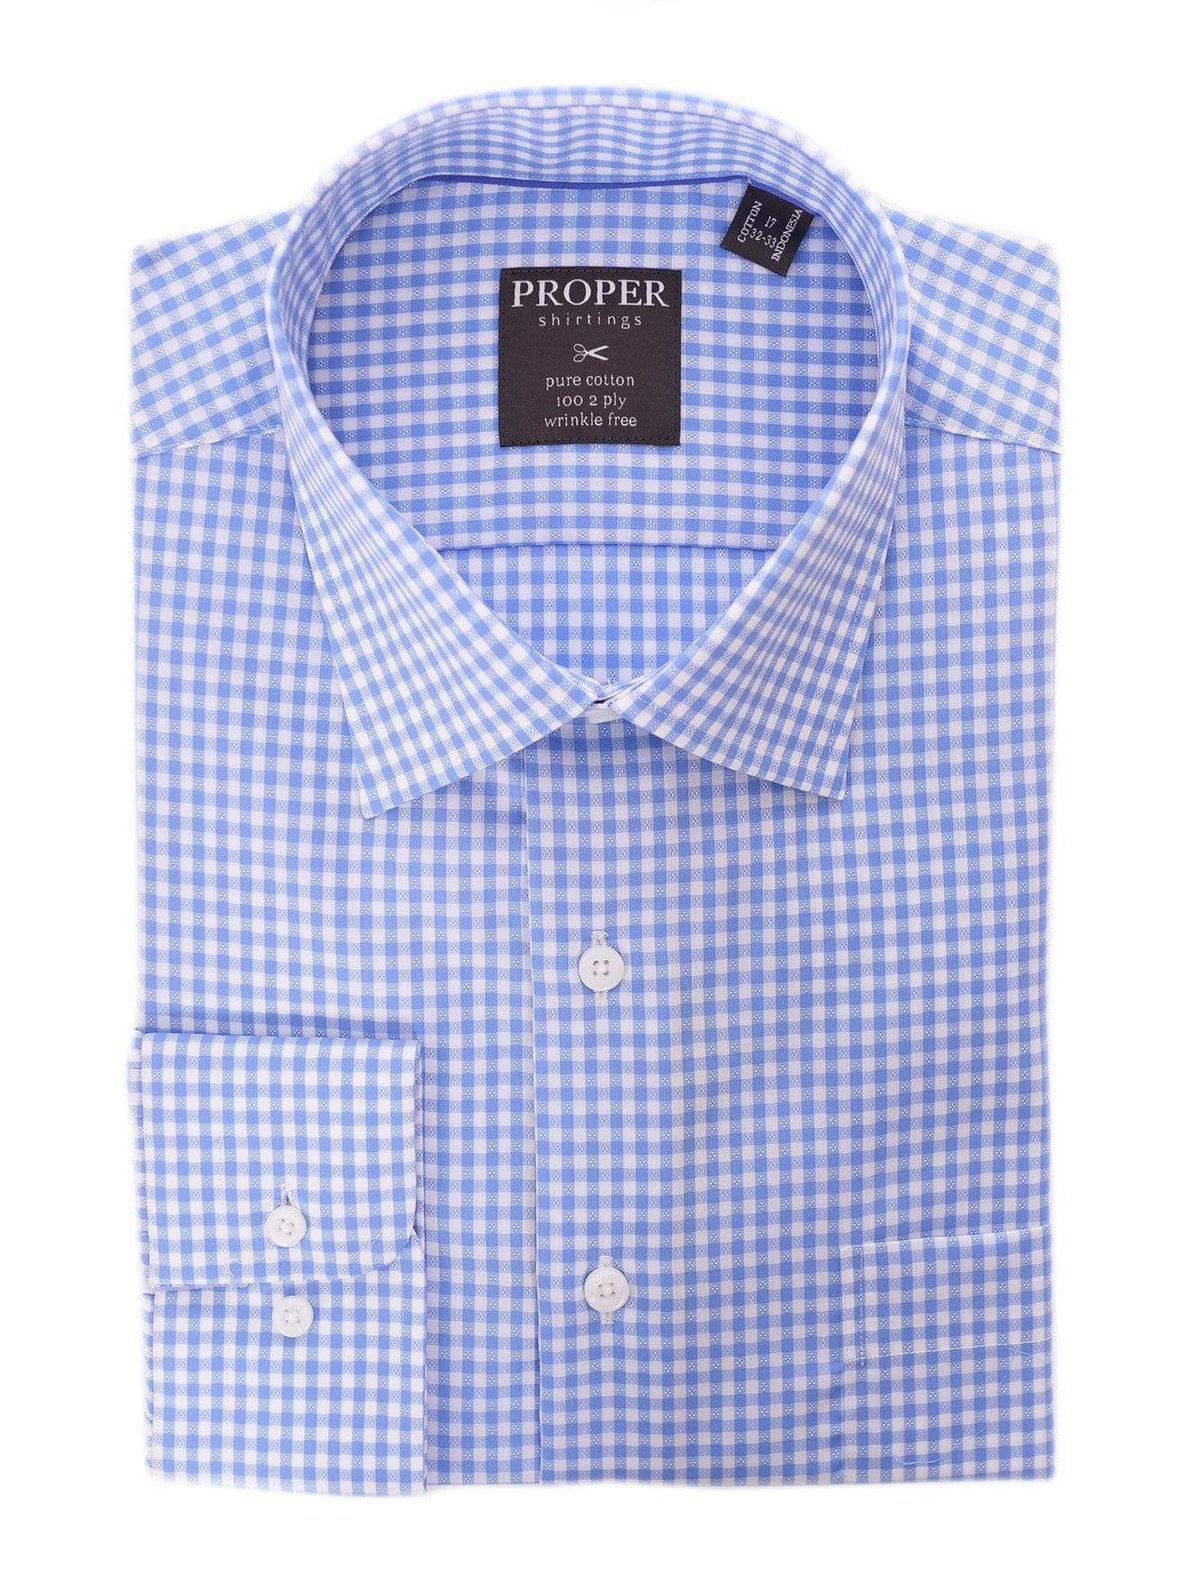 Proper Shirtings SHIRTS 17 32/33 Mens Blue & White Check Spread Collar Wrinkle Free 100 2 Ply Cotton Dress Shirt